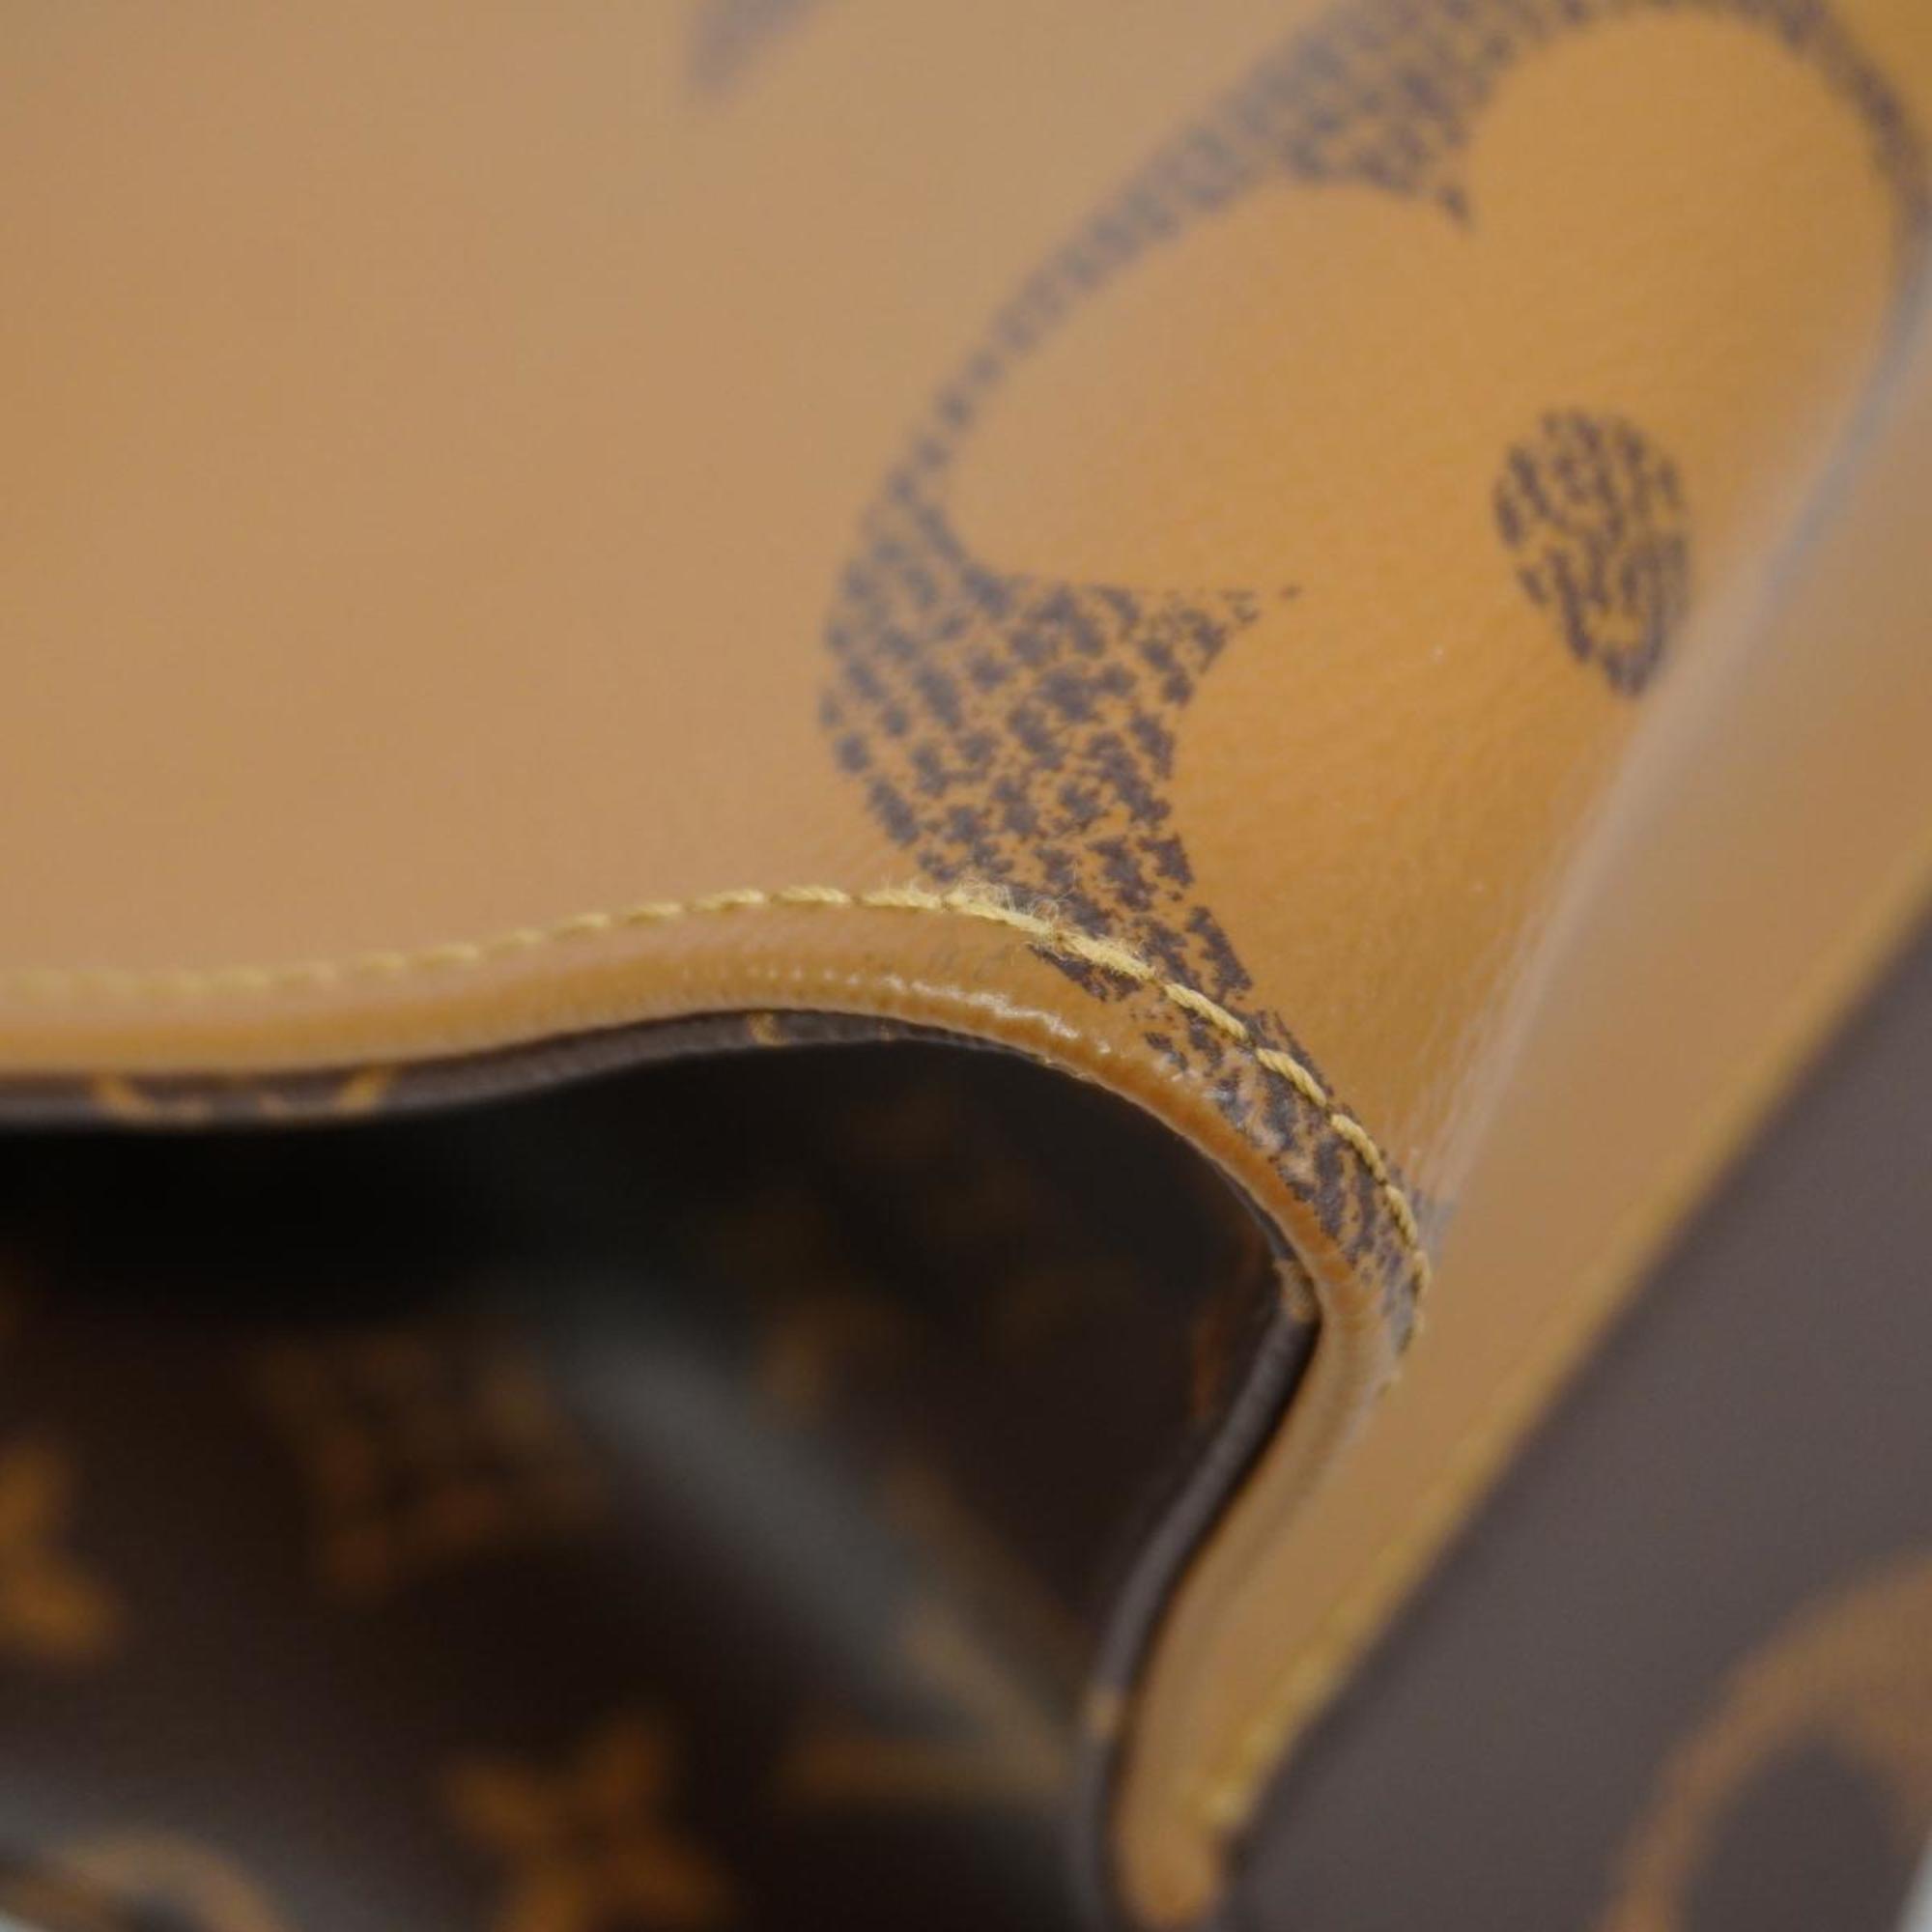 Louis Vuitton Handbag Monogram Giant On-the-Go MM M45321 Brown Women's